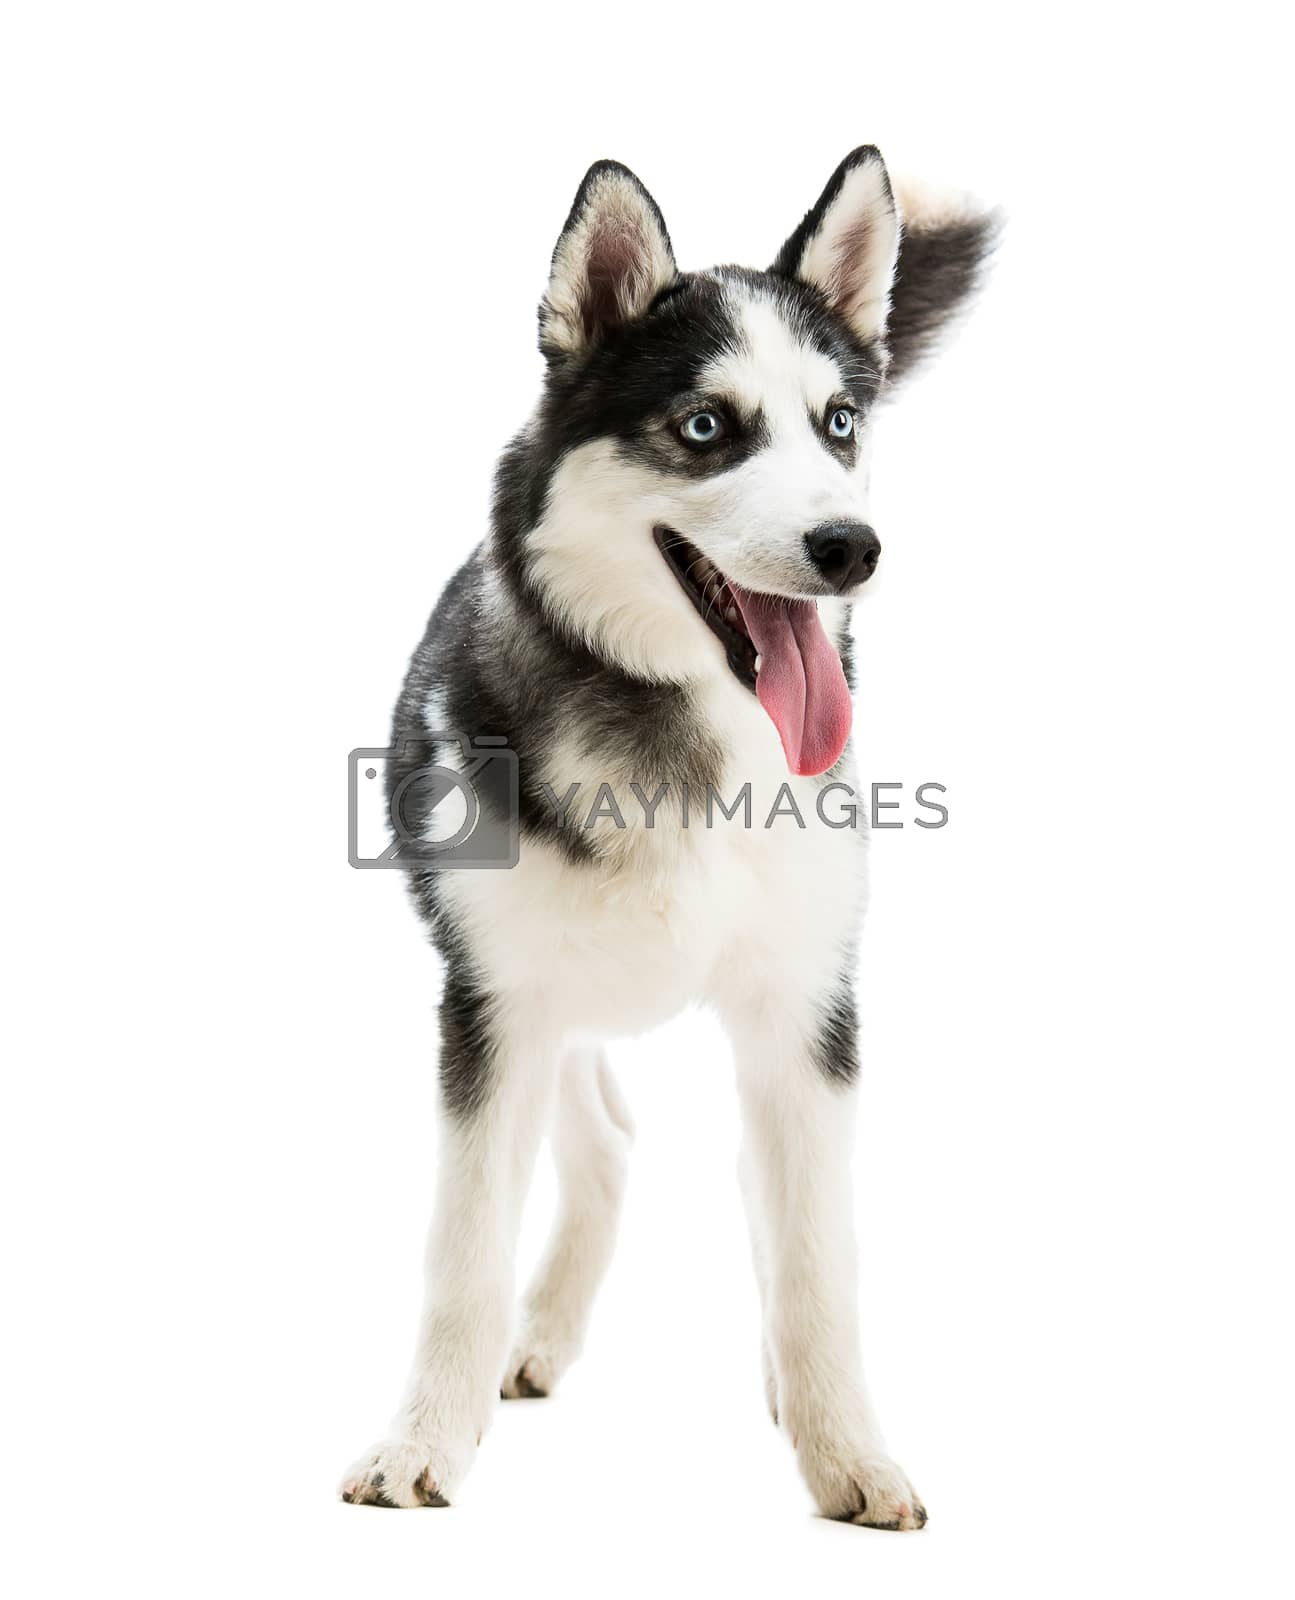 Royalty free image of Husky dog breed by GekaSkr